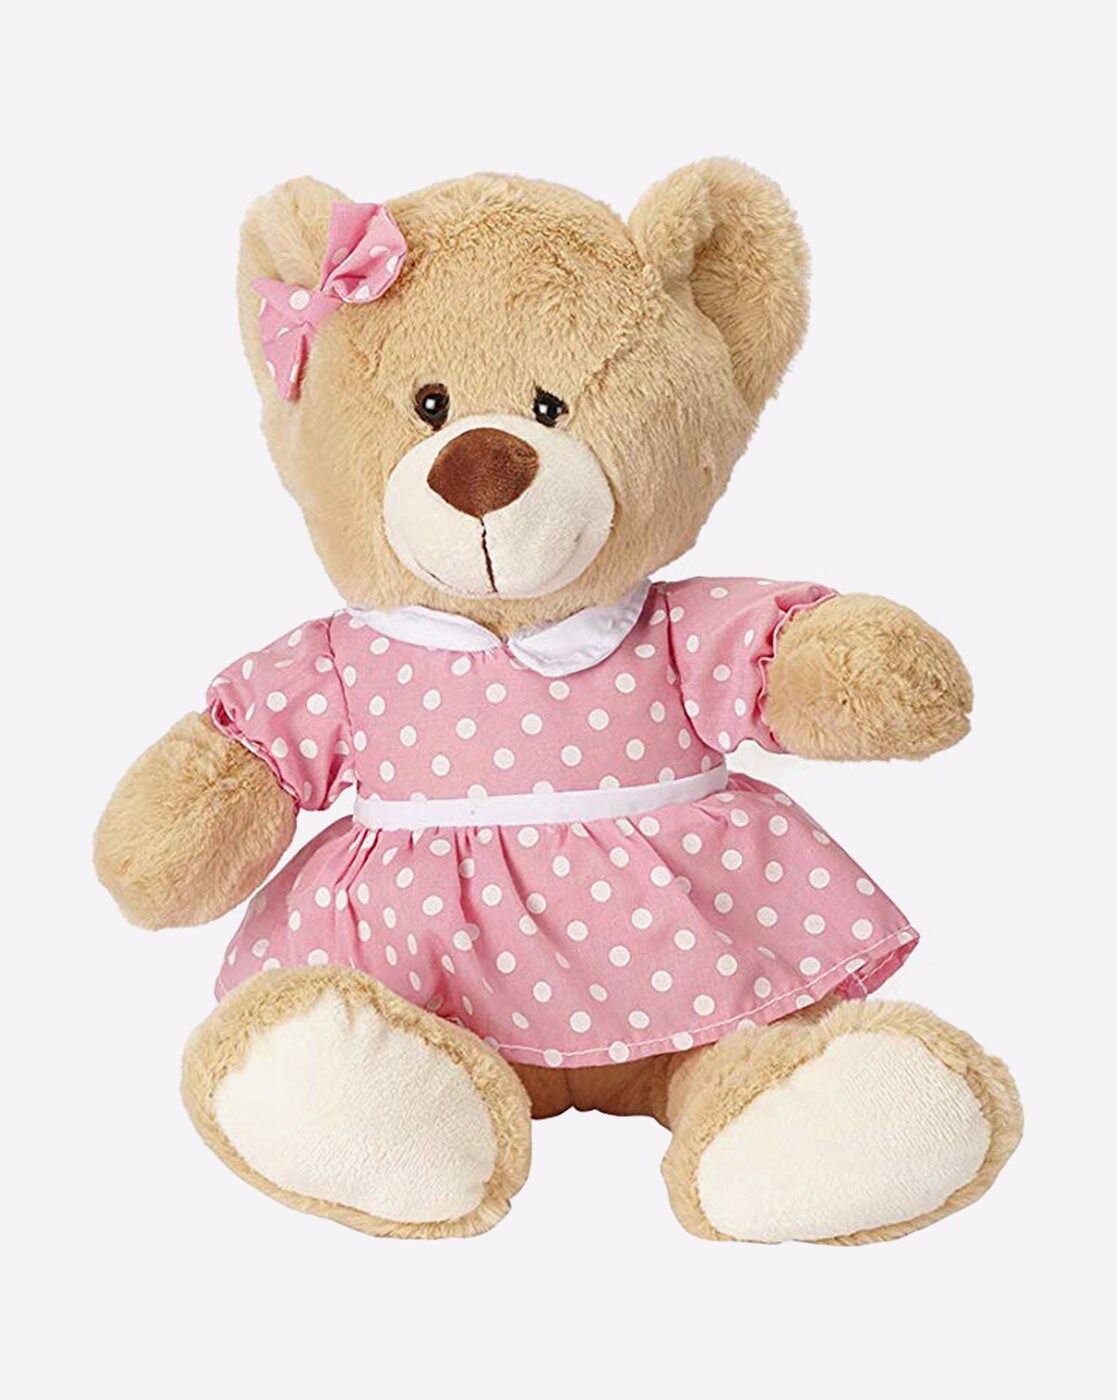 teddy bear dolls online purchase